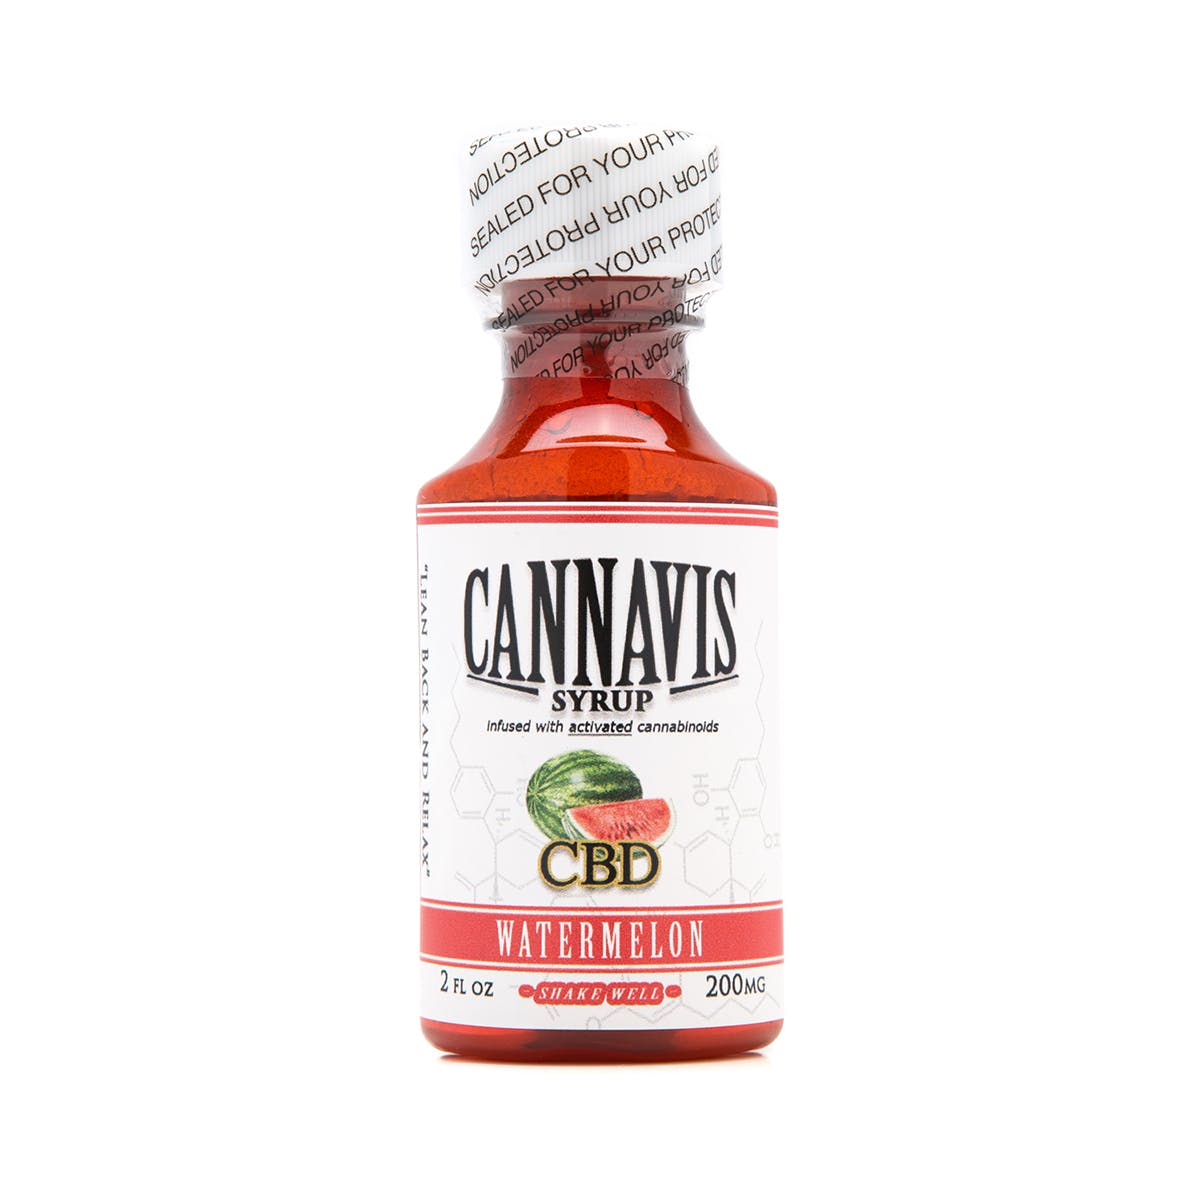 marijuana-dispensaries-straight-up-20-in-compton-cannavis-syrup-2c-cbd-watermelon-200mg